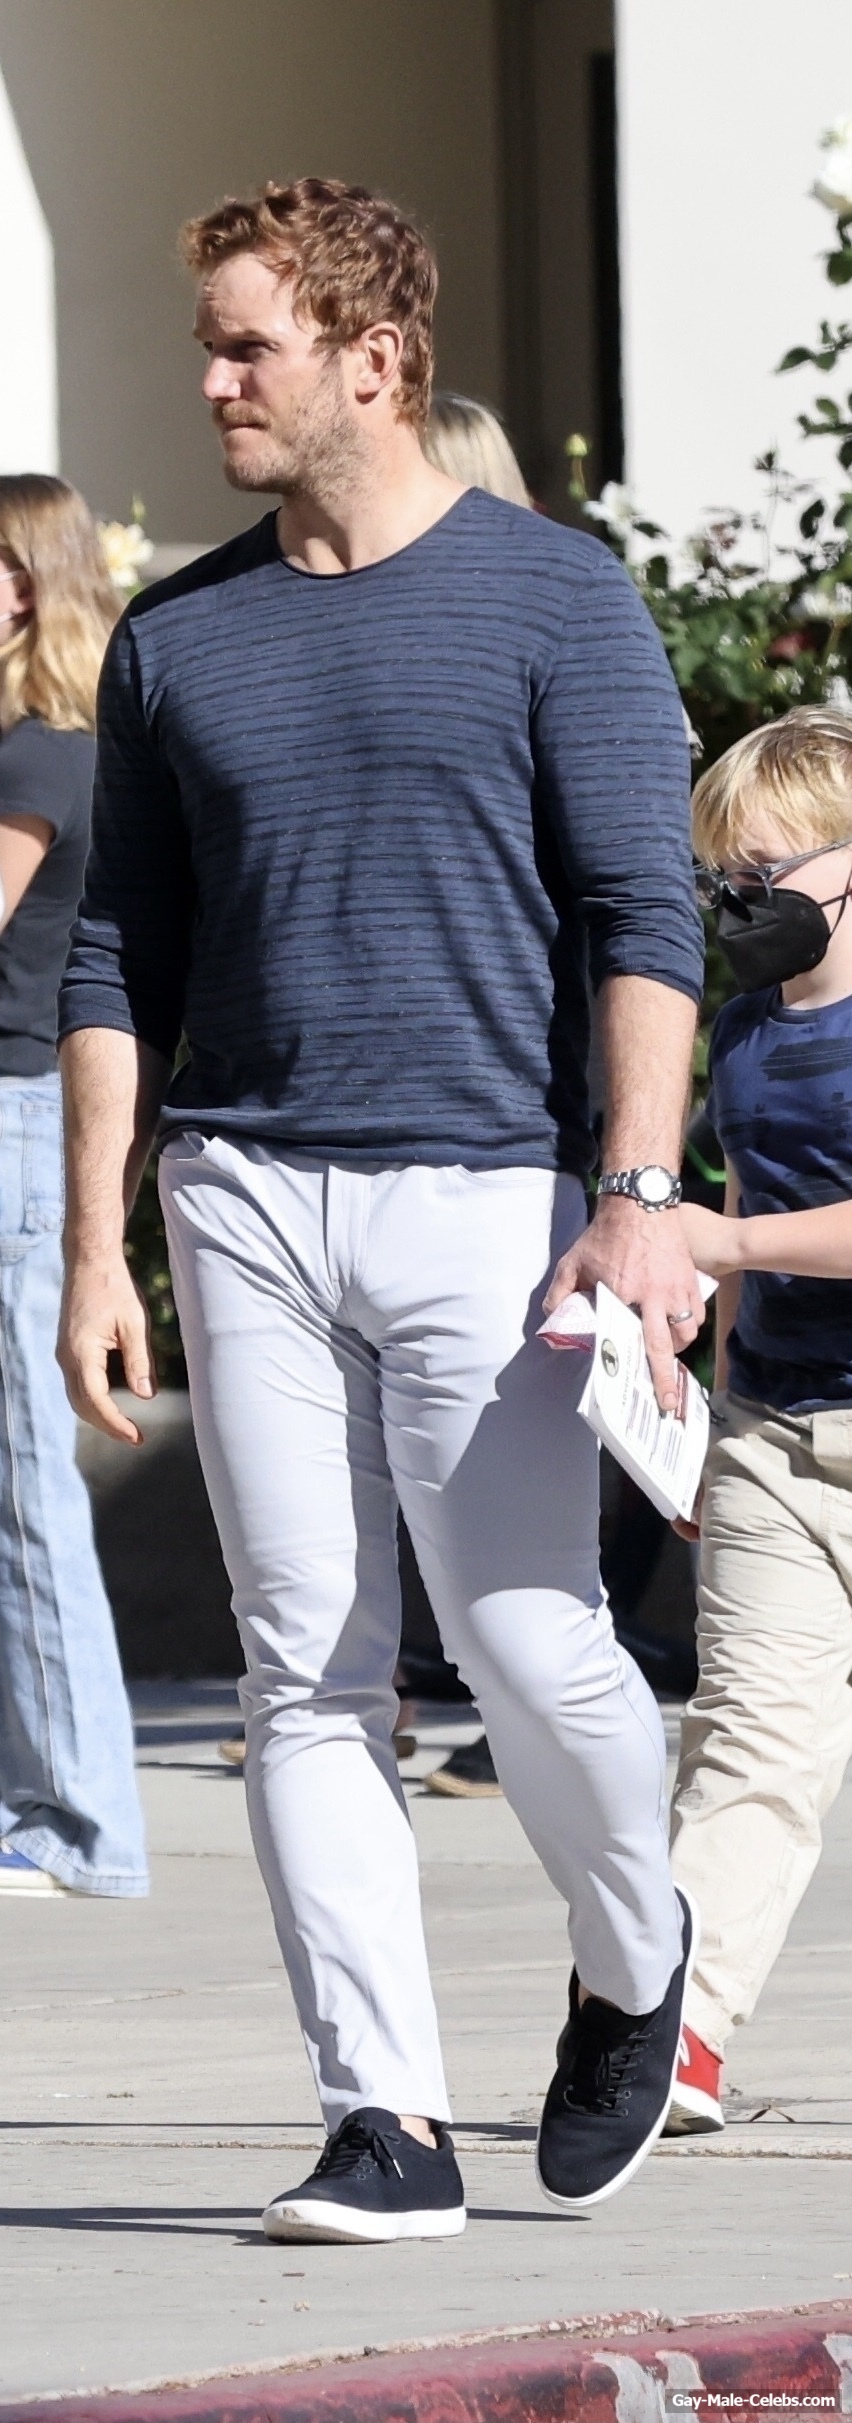 Chris Pratt Huge Bulge And Sexy Photos